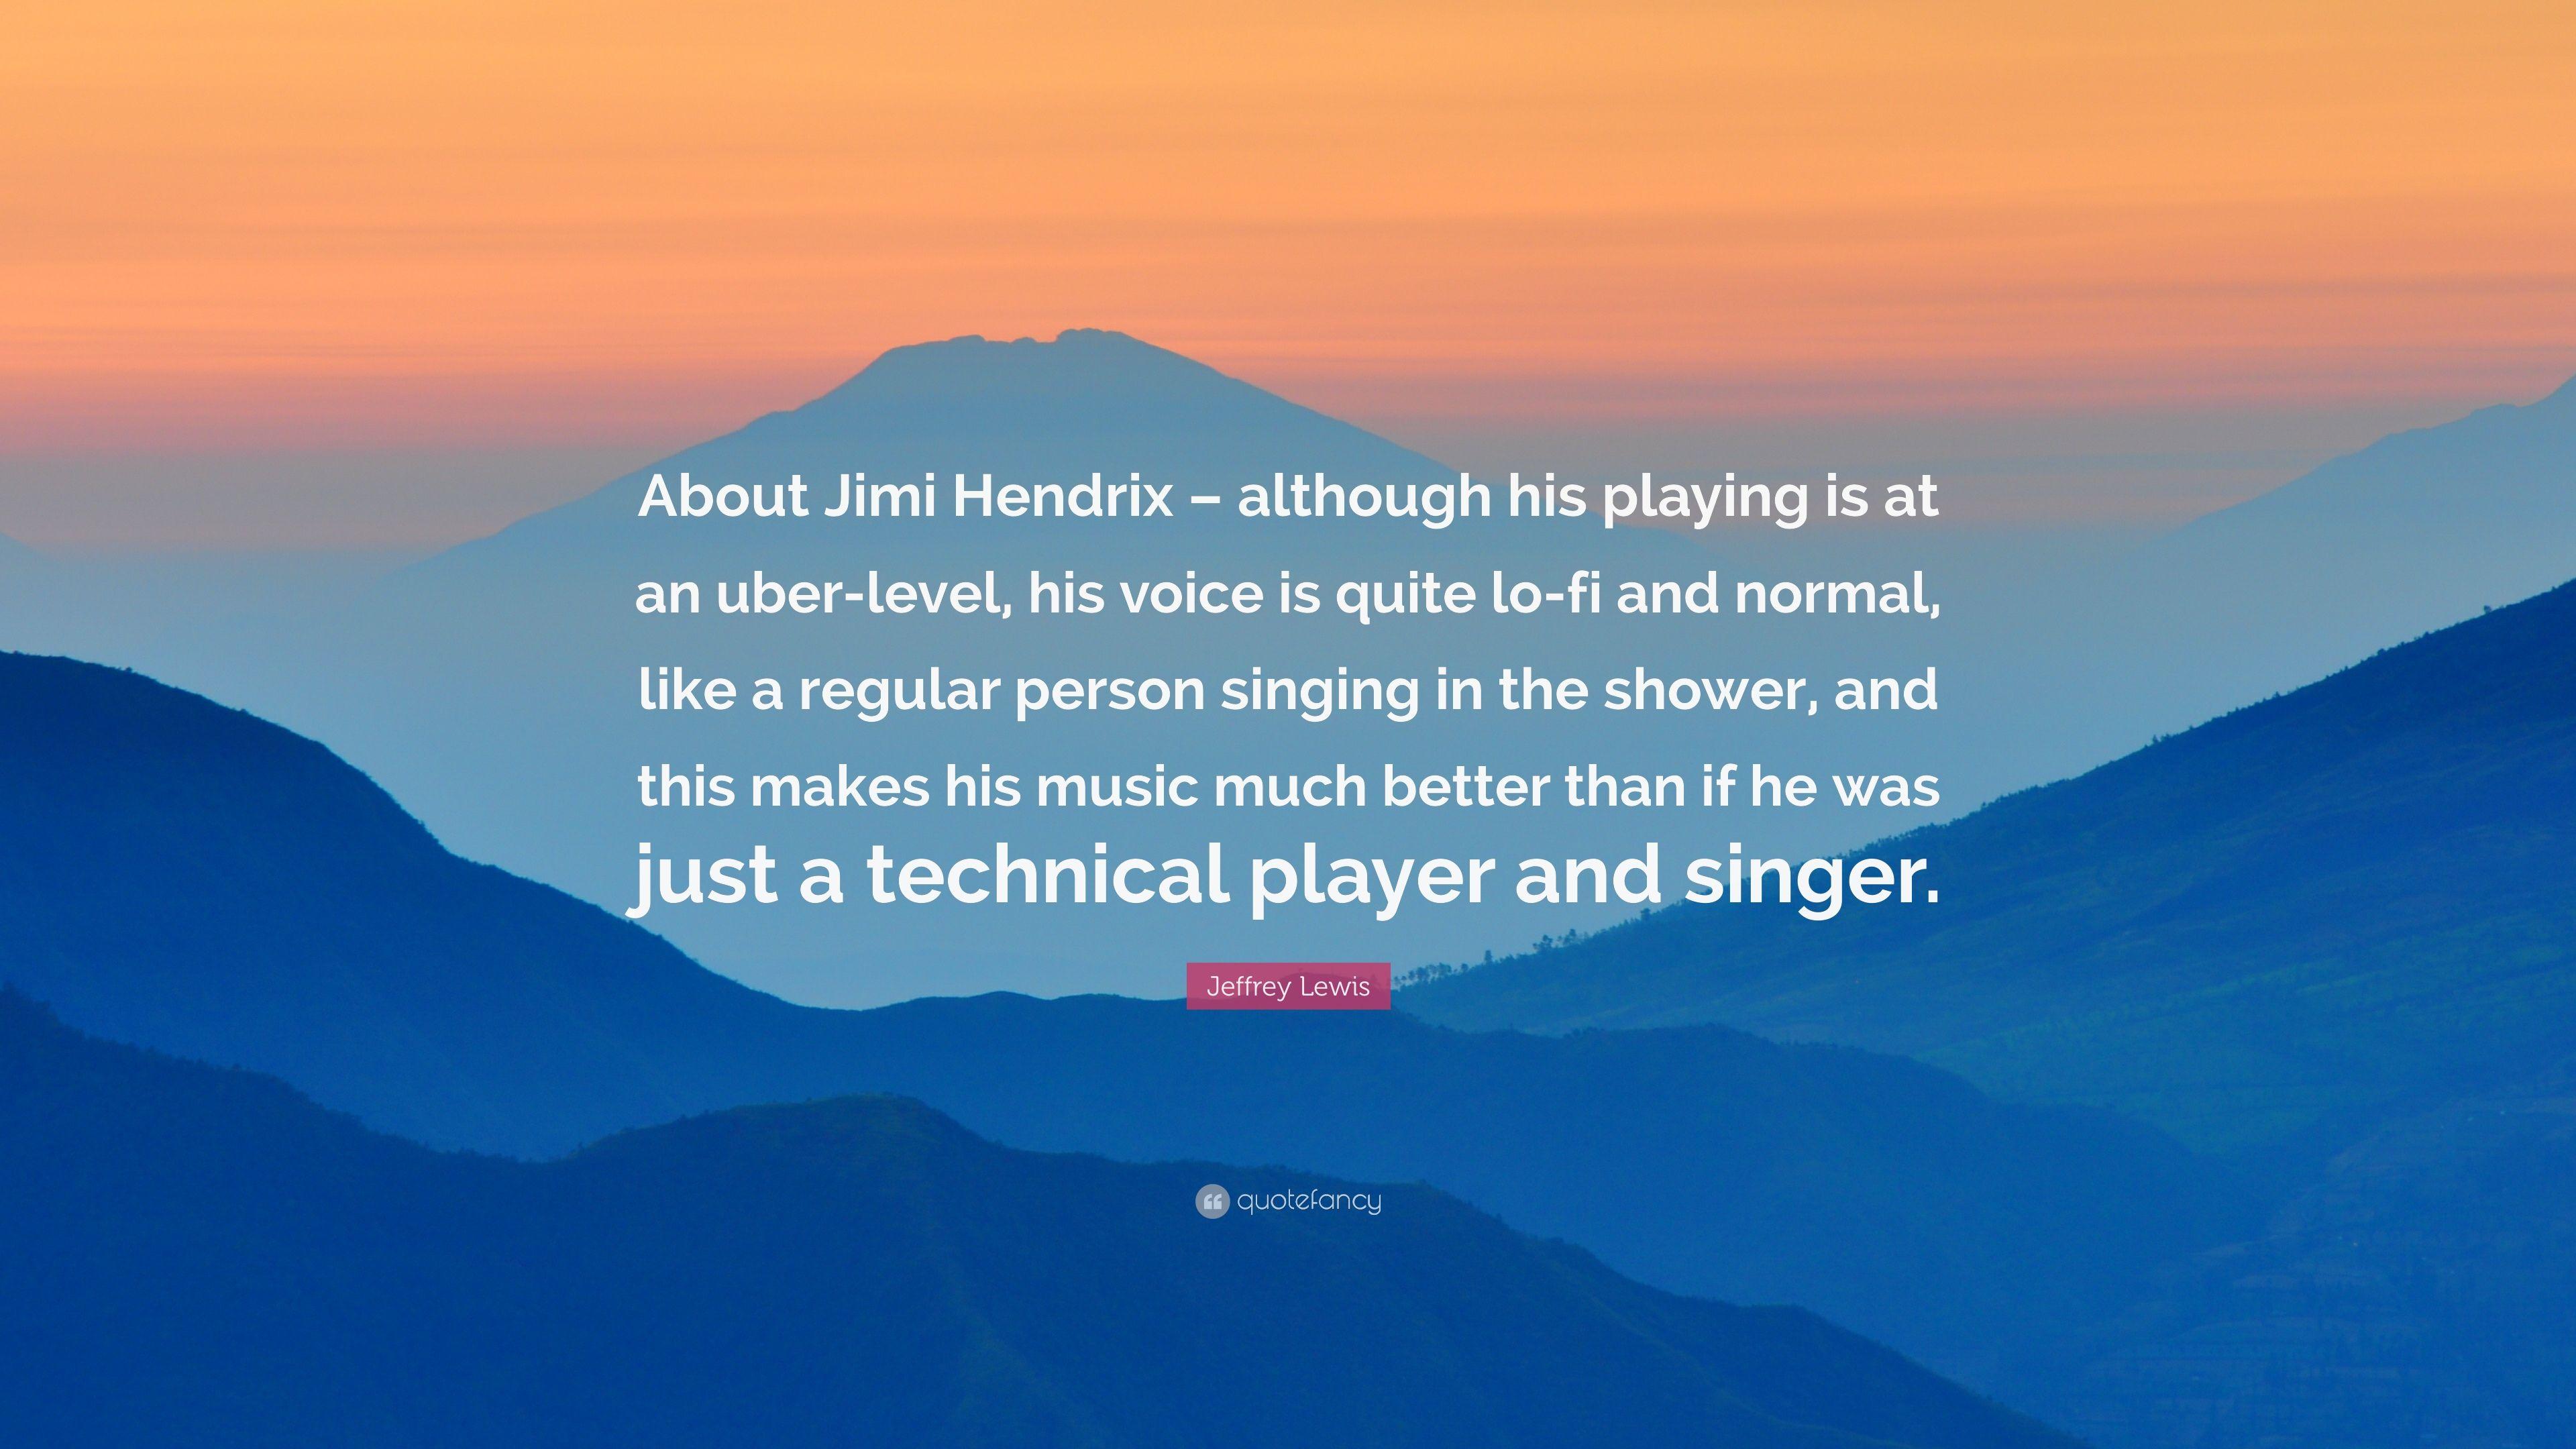 Jeffrey Lewis Quote: “About Jimi Hendrix